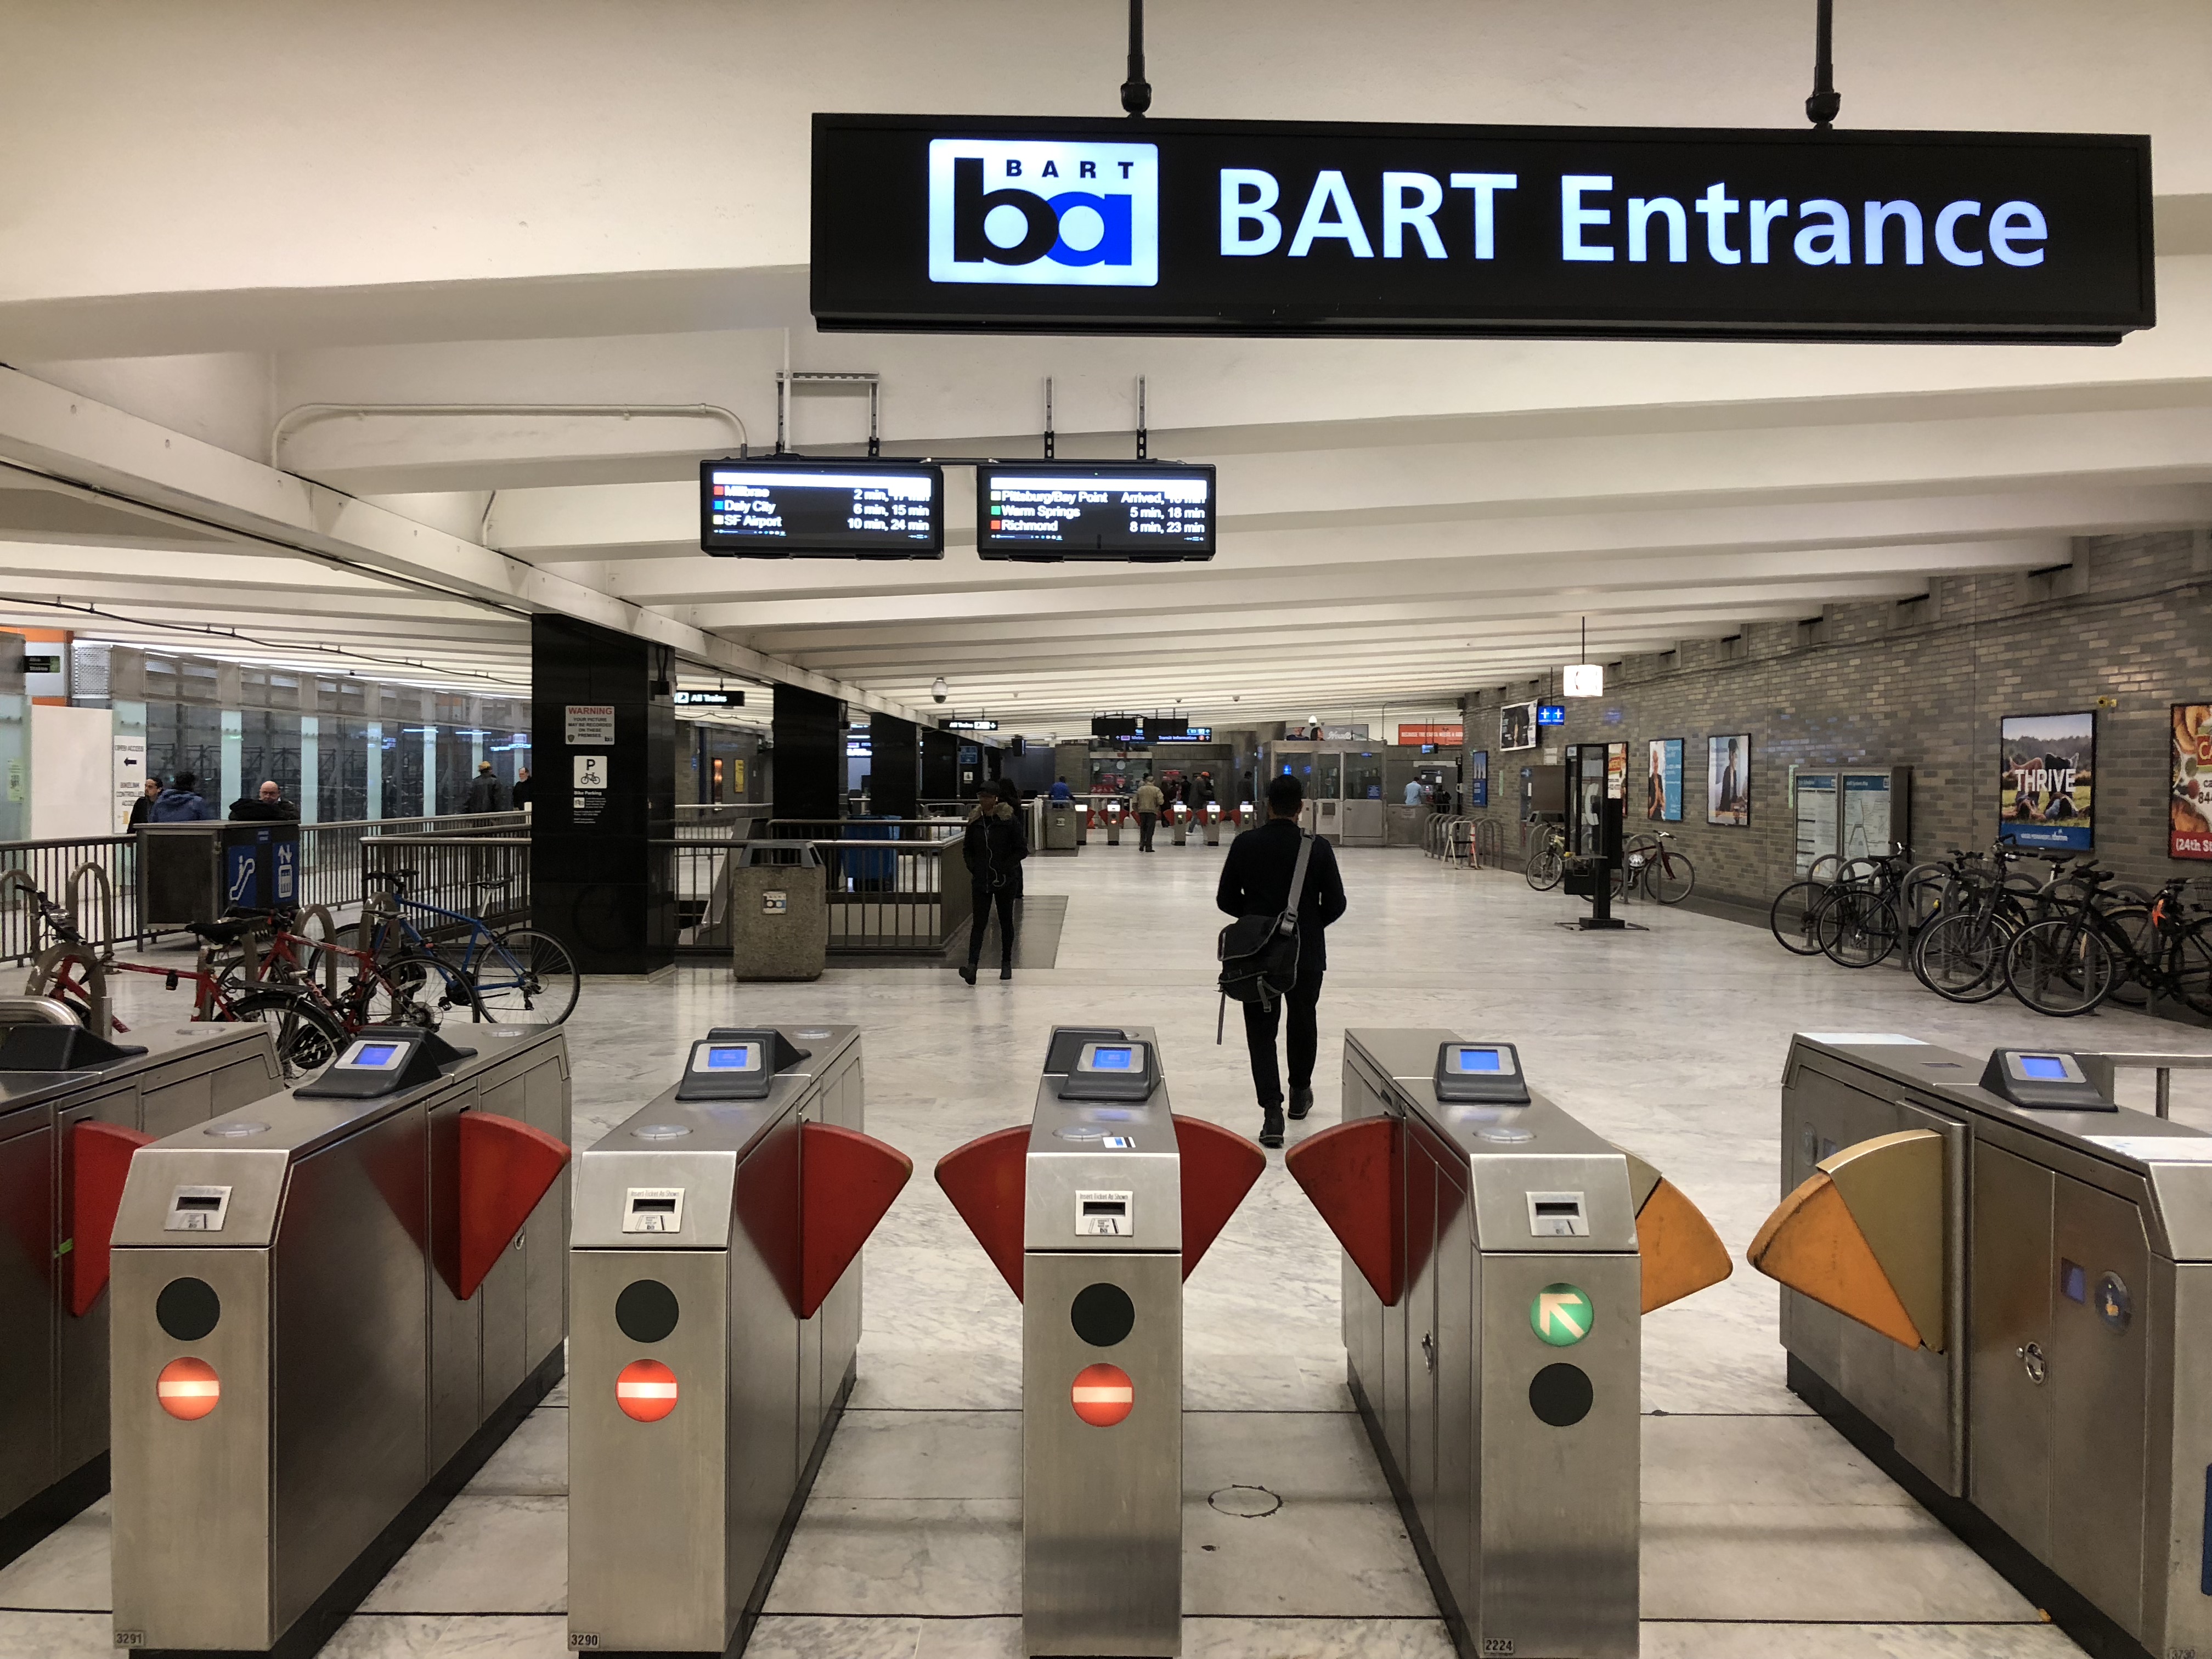 Displays above fare gates